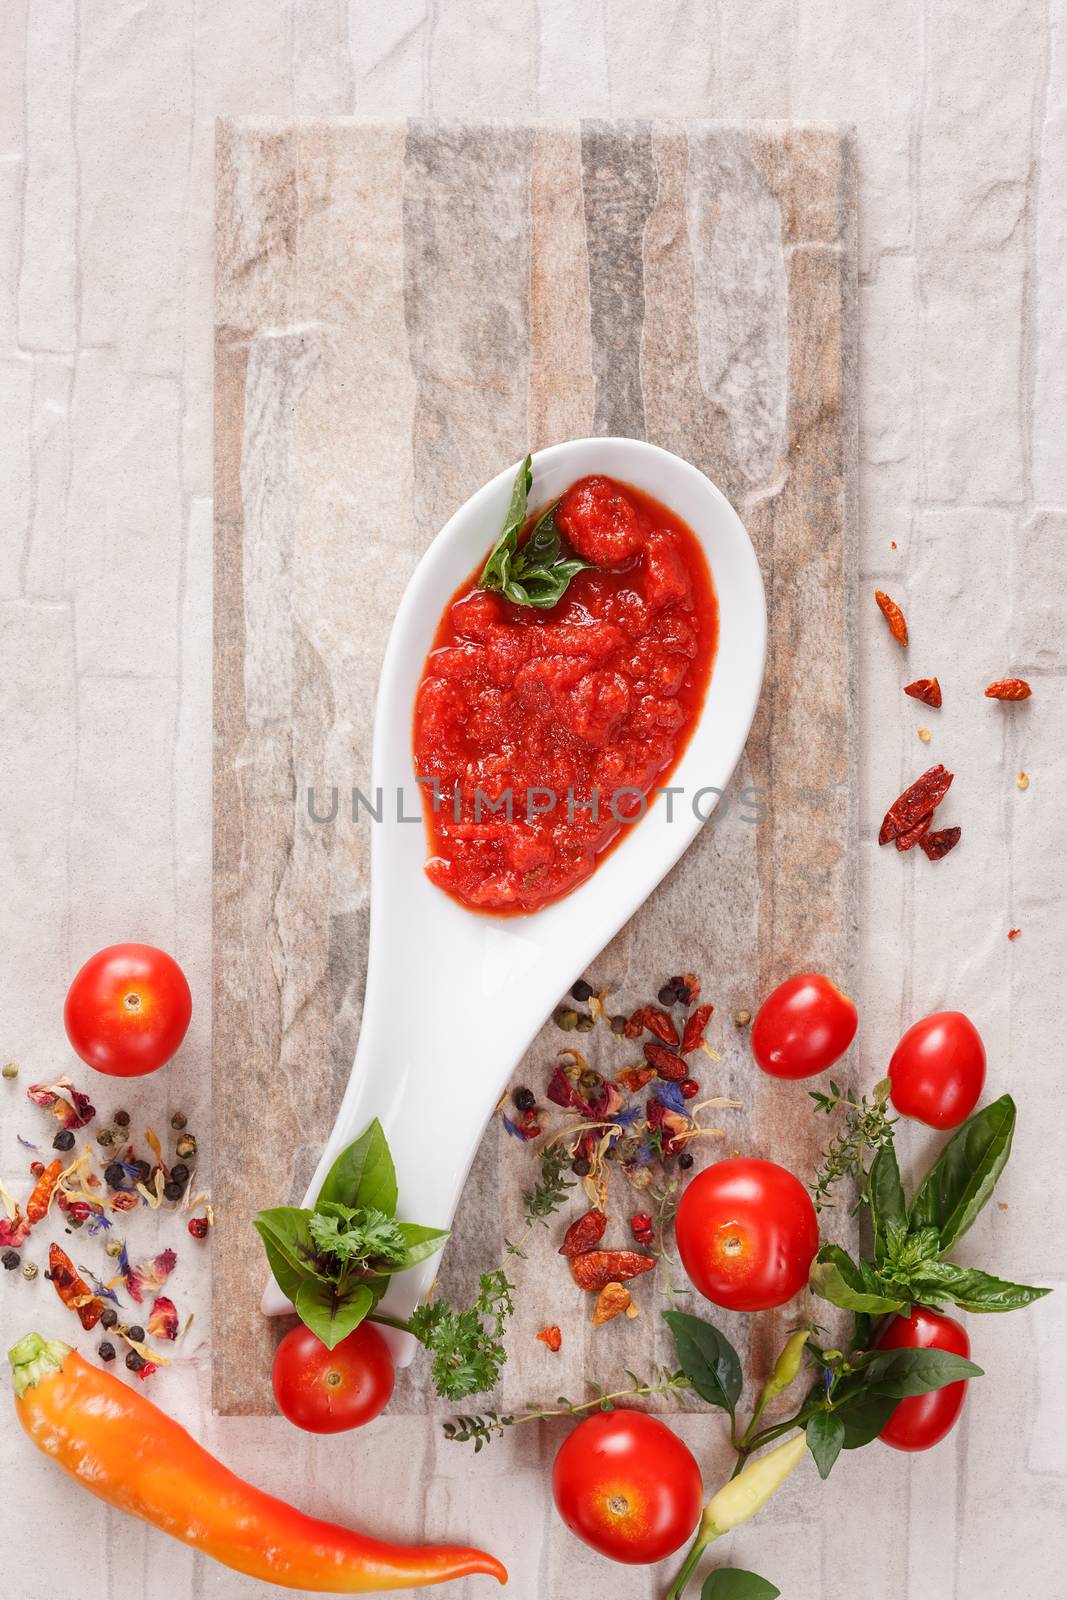 Tomato chutney with ingredients by Slast20